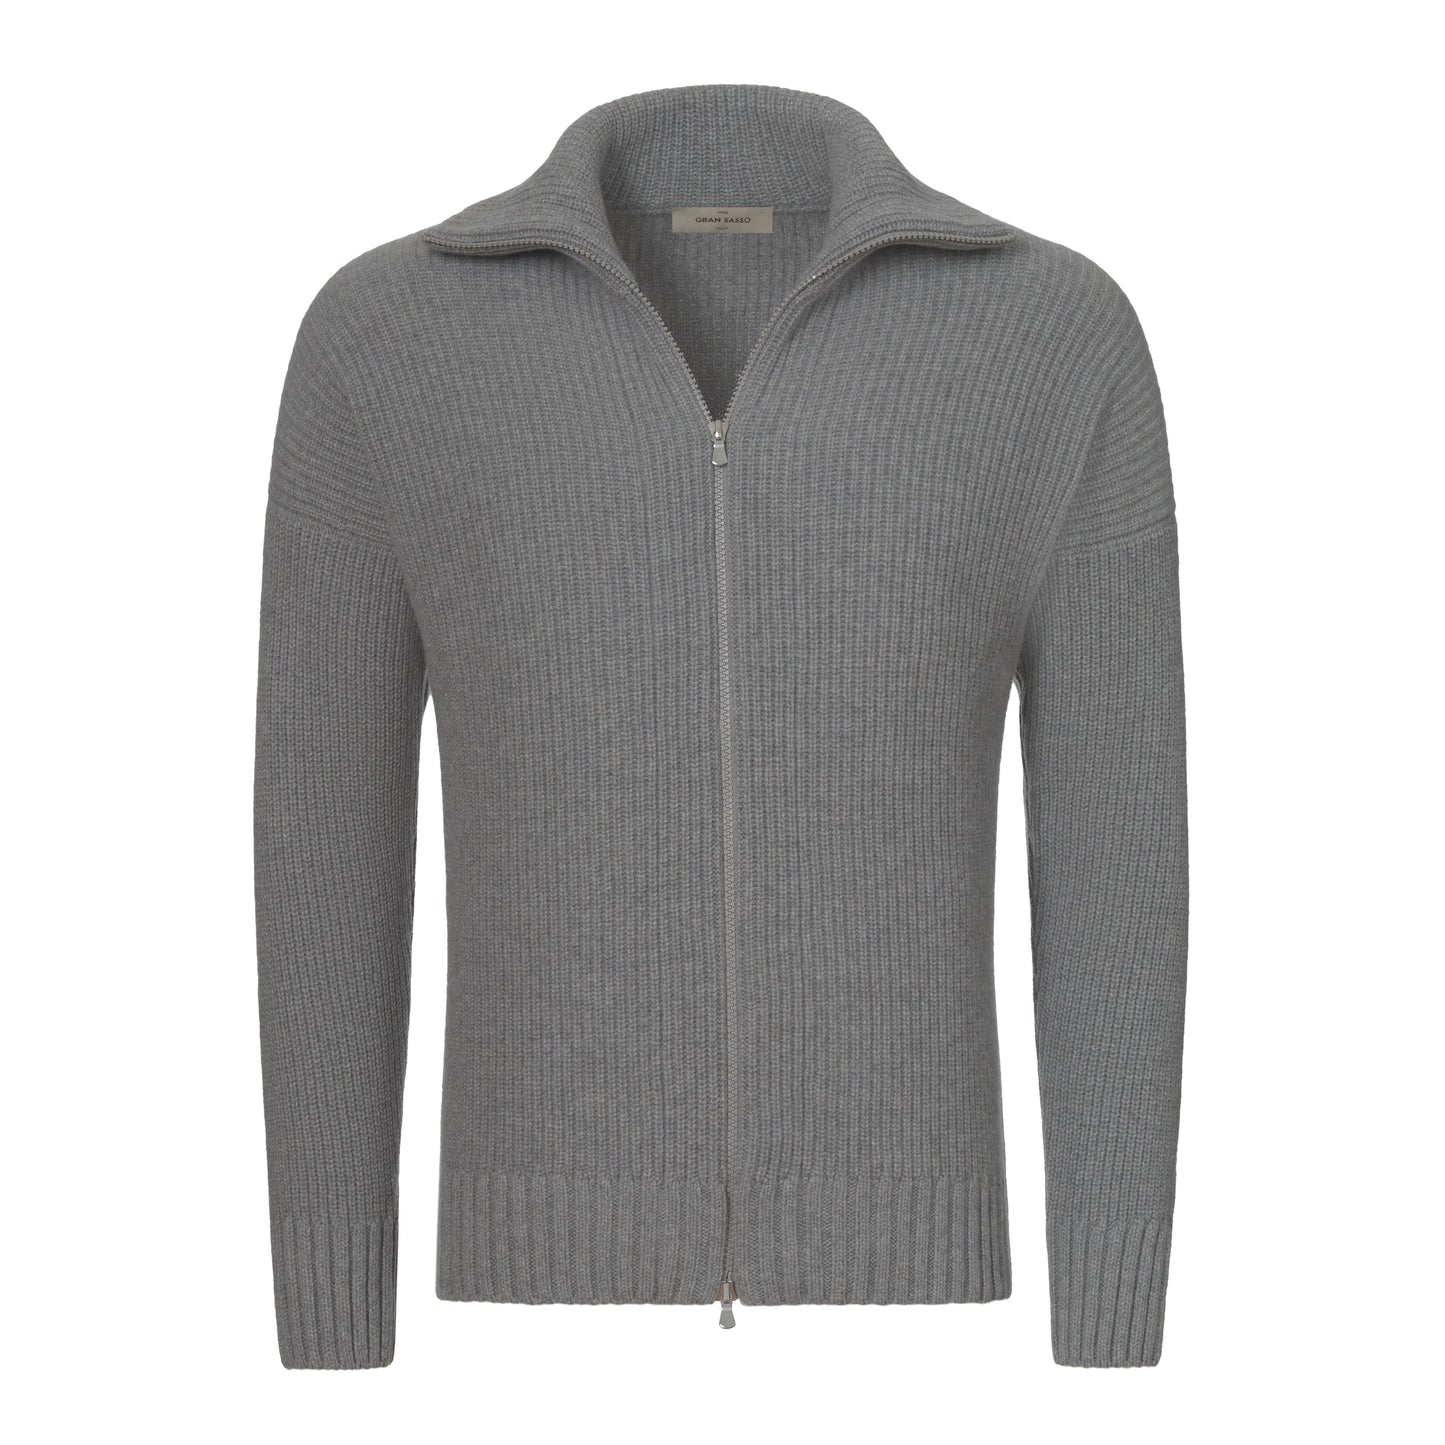 Gran Sasso Cashmere - Wool Zip Cardigan in Grey Melange - SARTALE